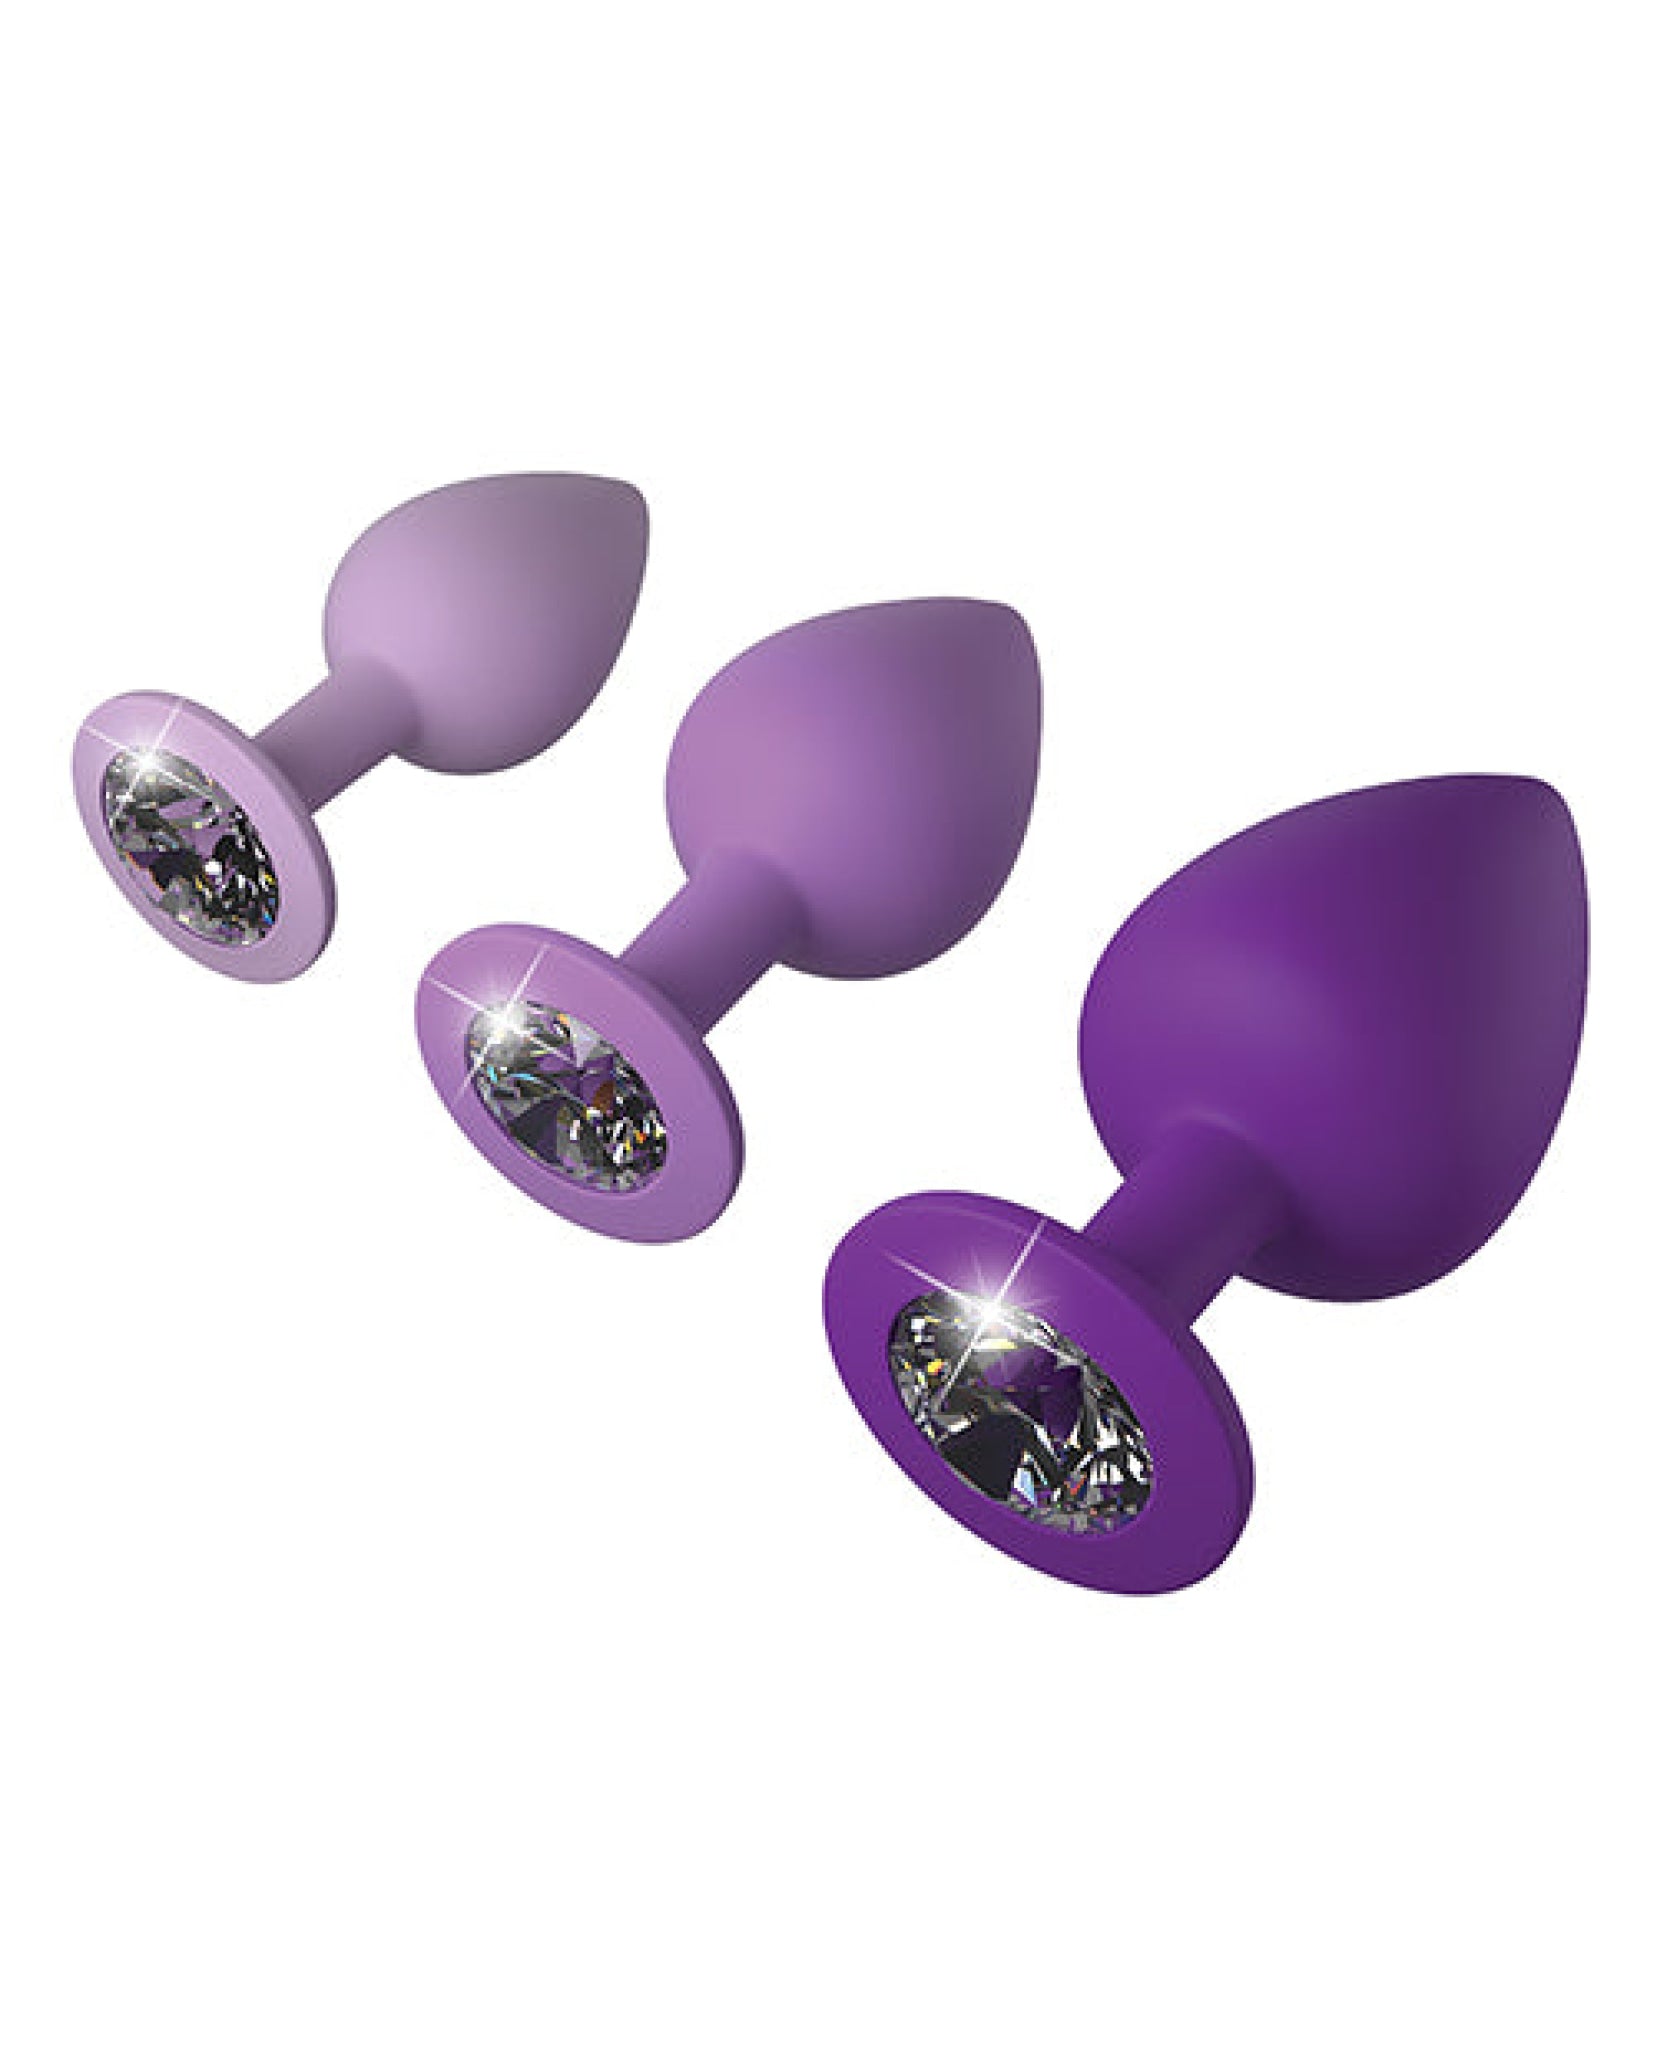 Fantasy For Her Little Gems Trainer Set - Purple Pipedream®